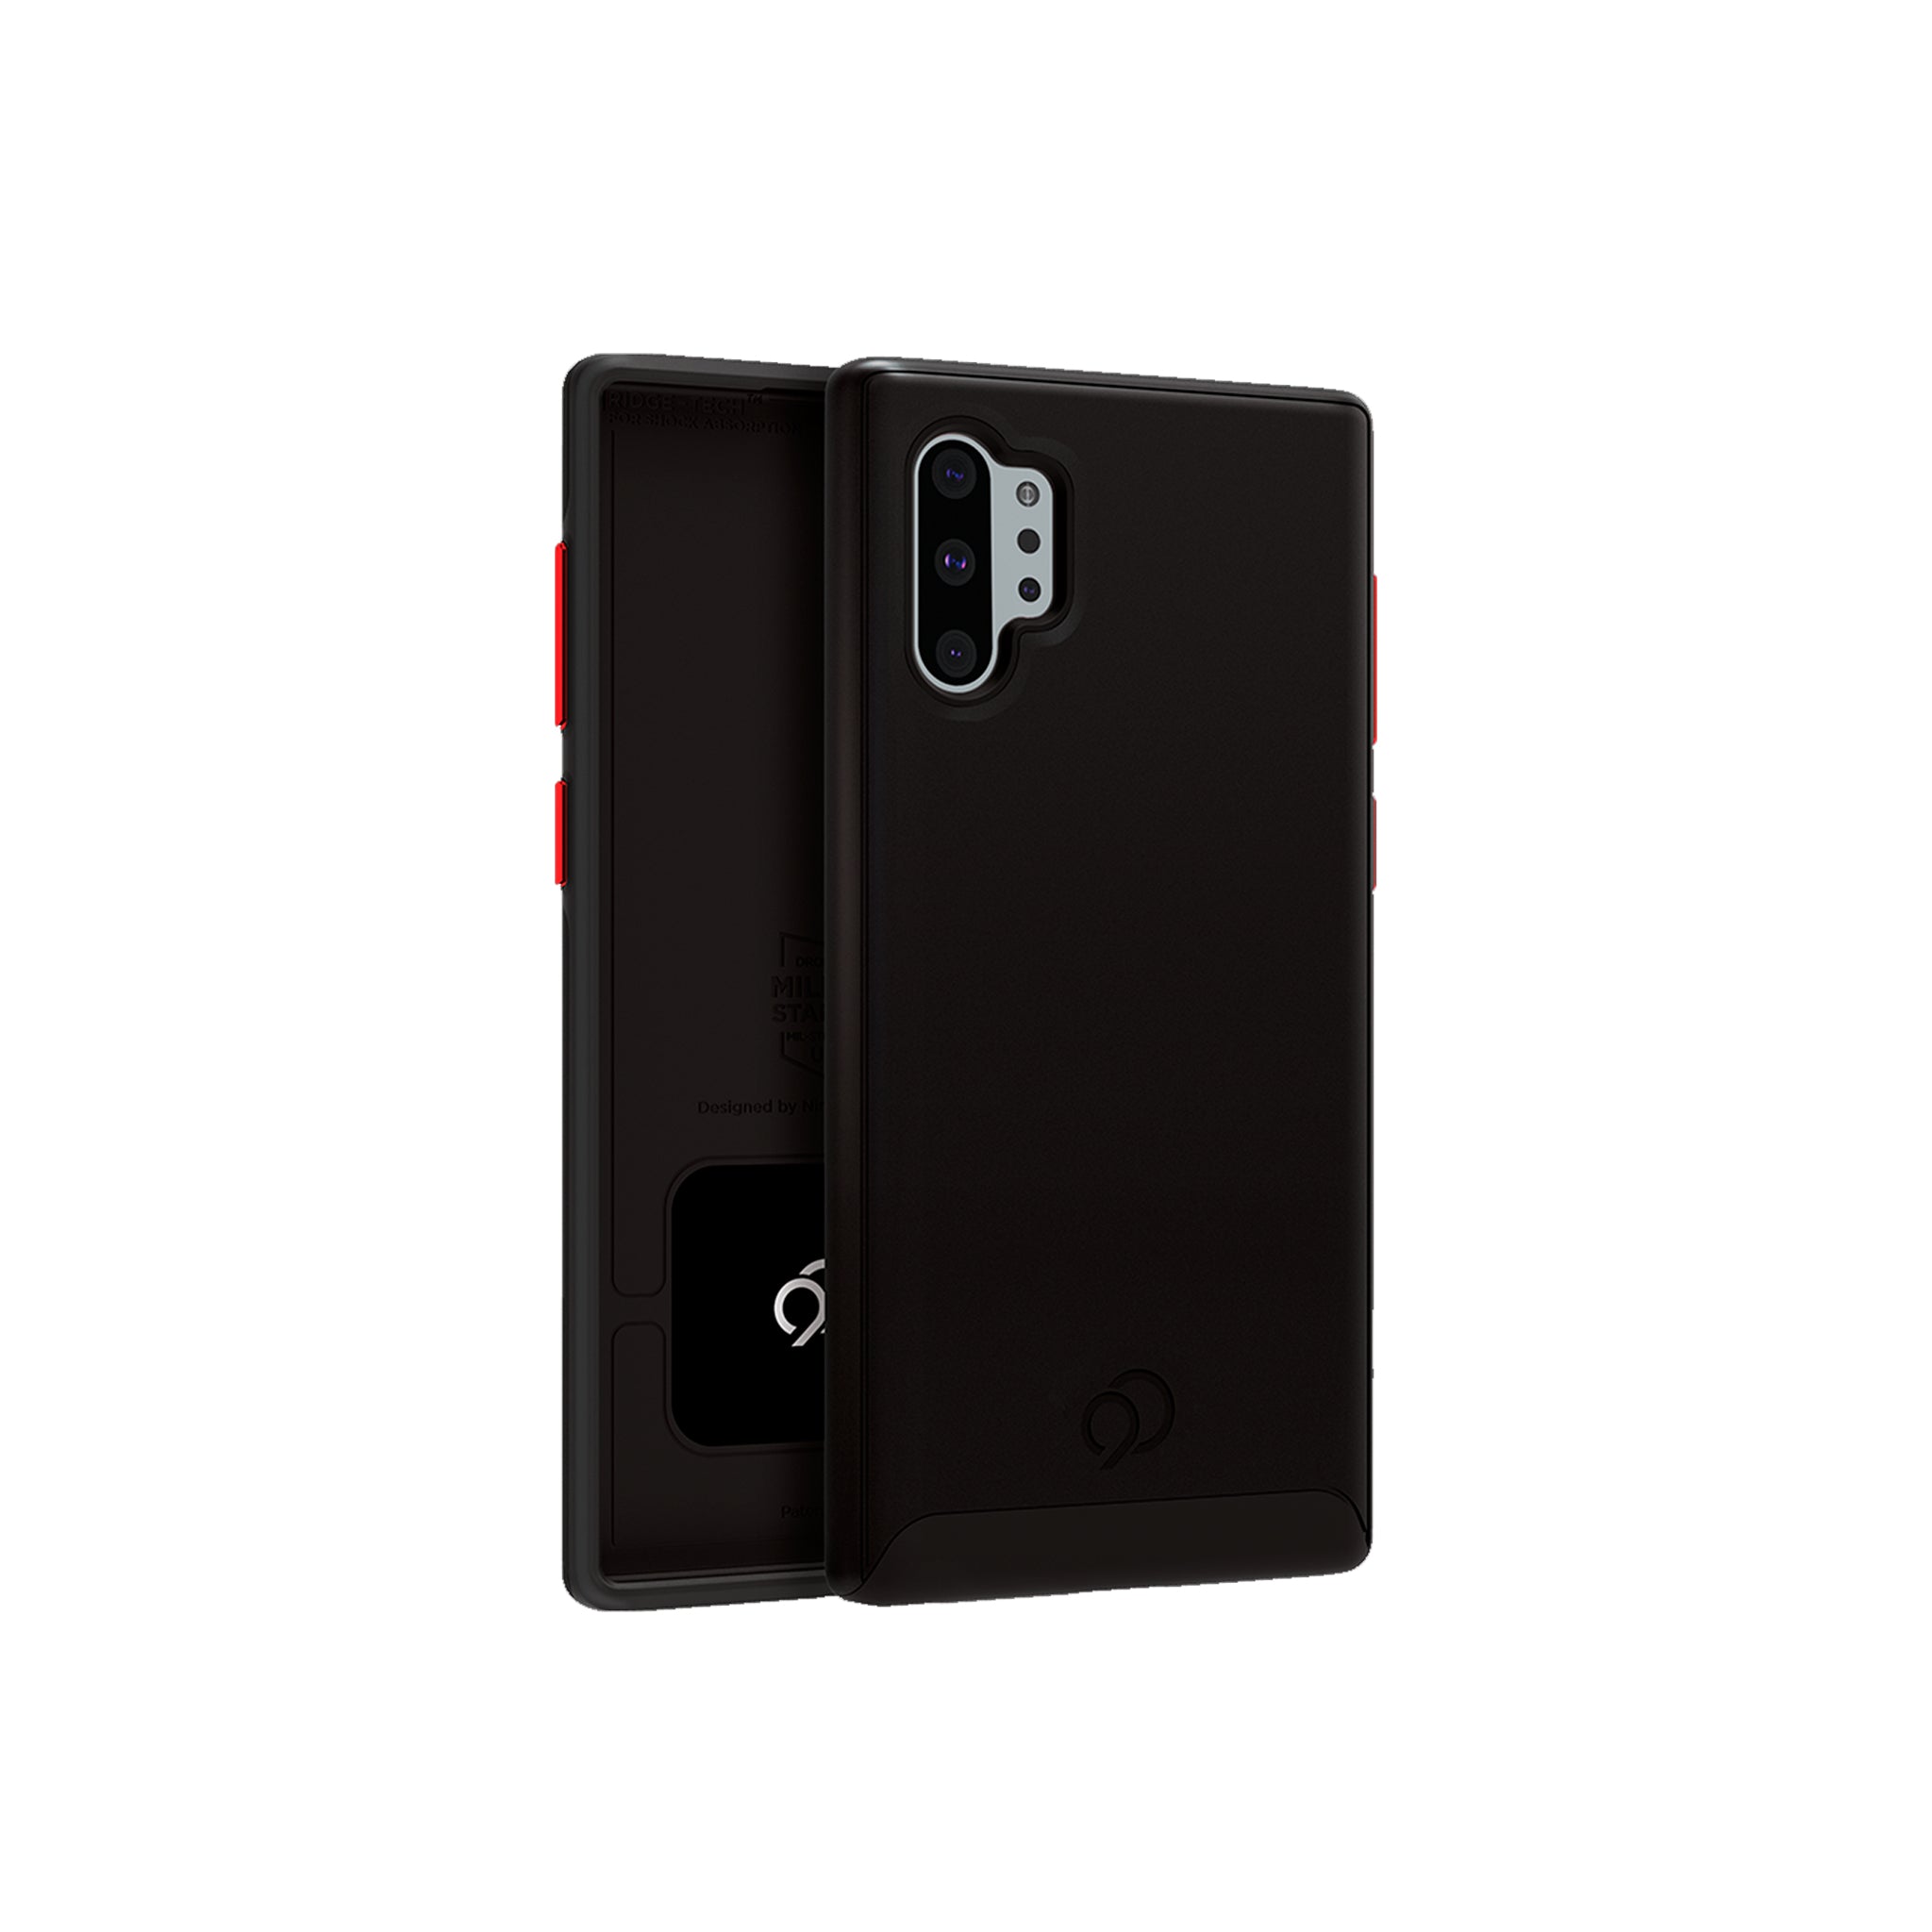 Nimbus9 - Cirrus 2 Case For Samsung Galaxy Note10 Plus - Black